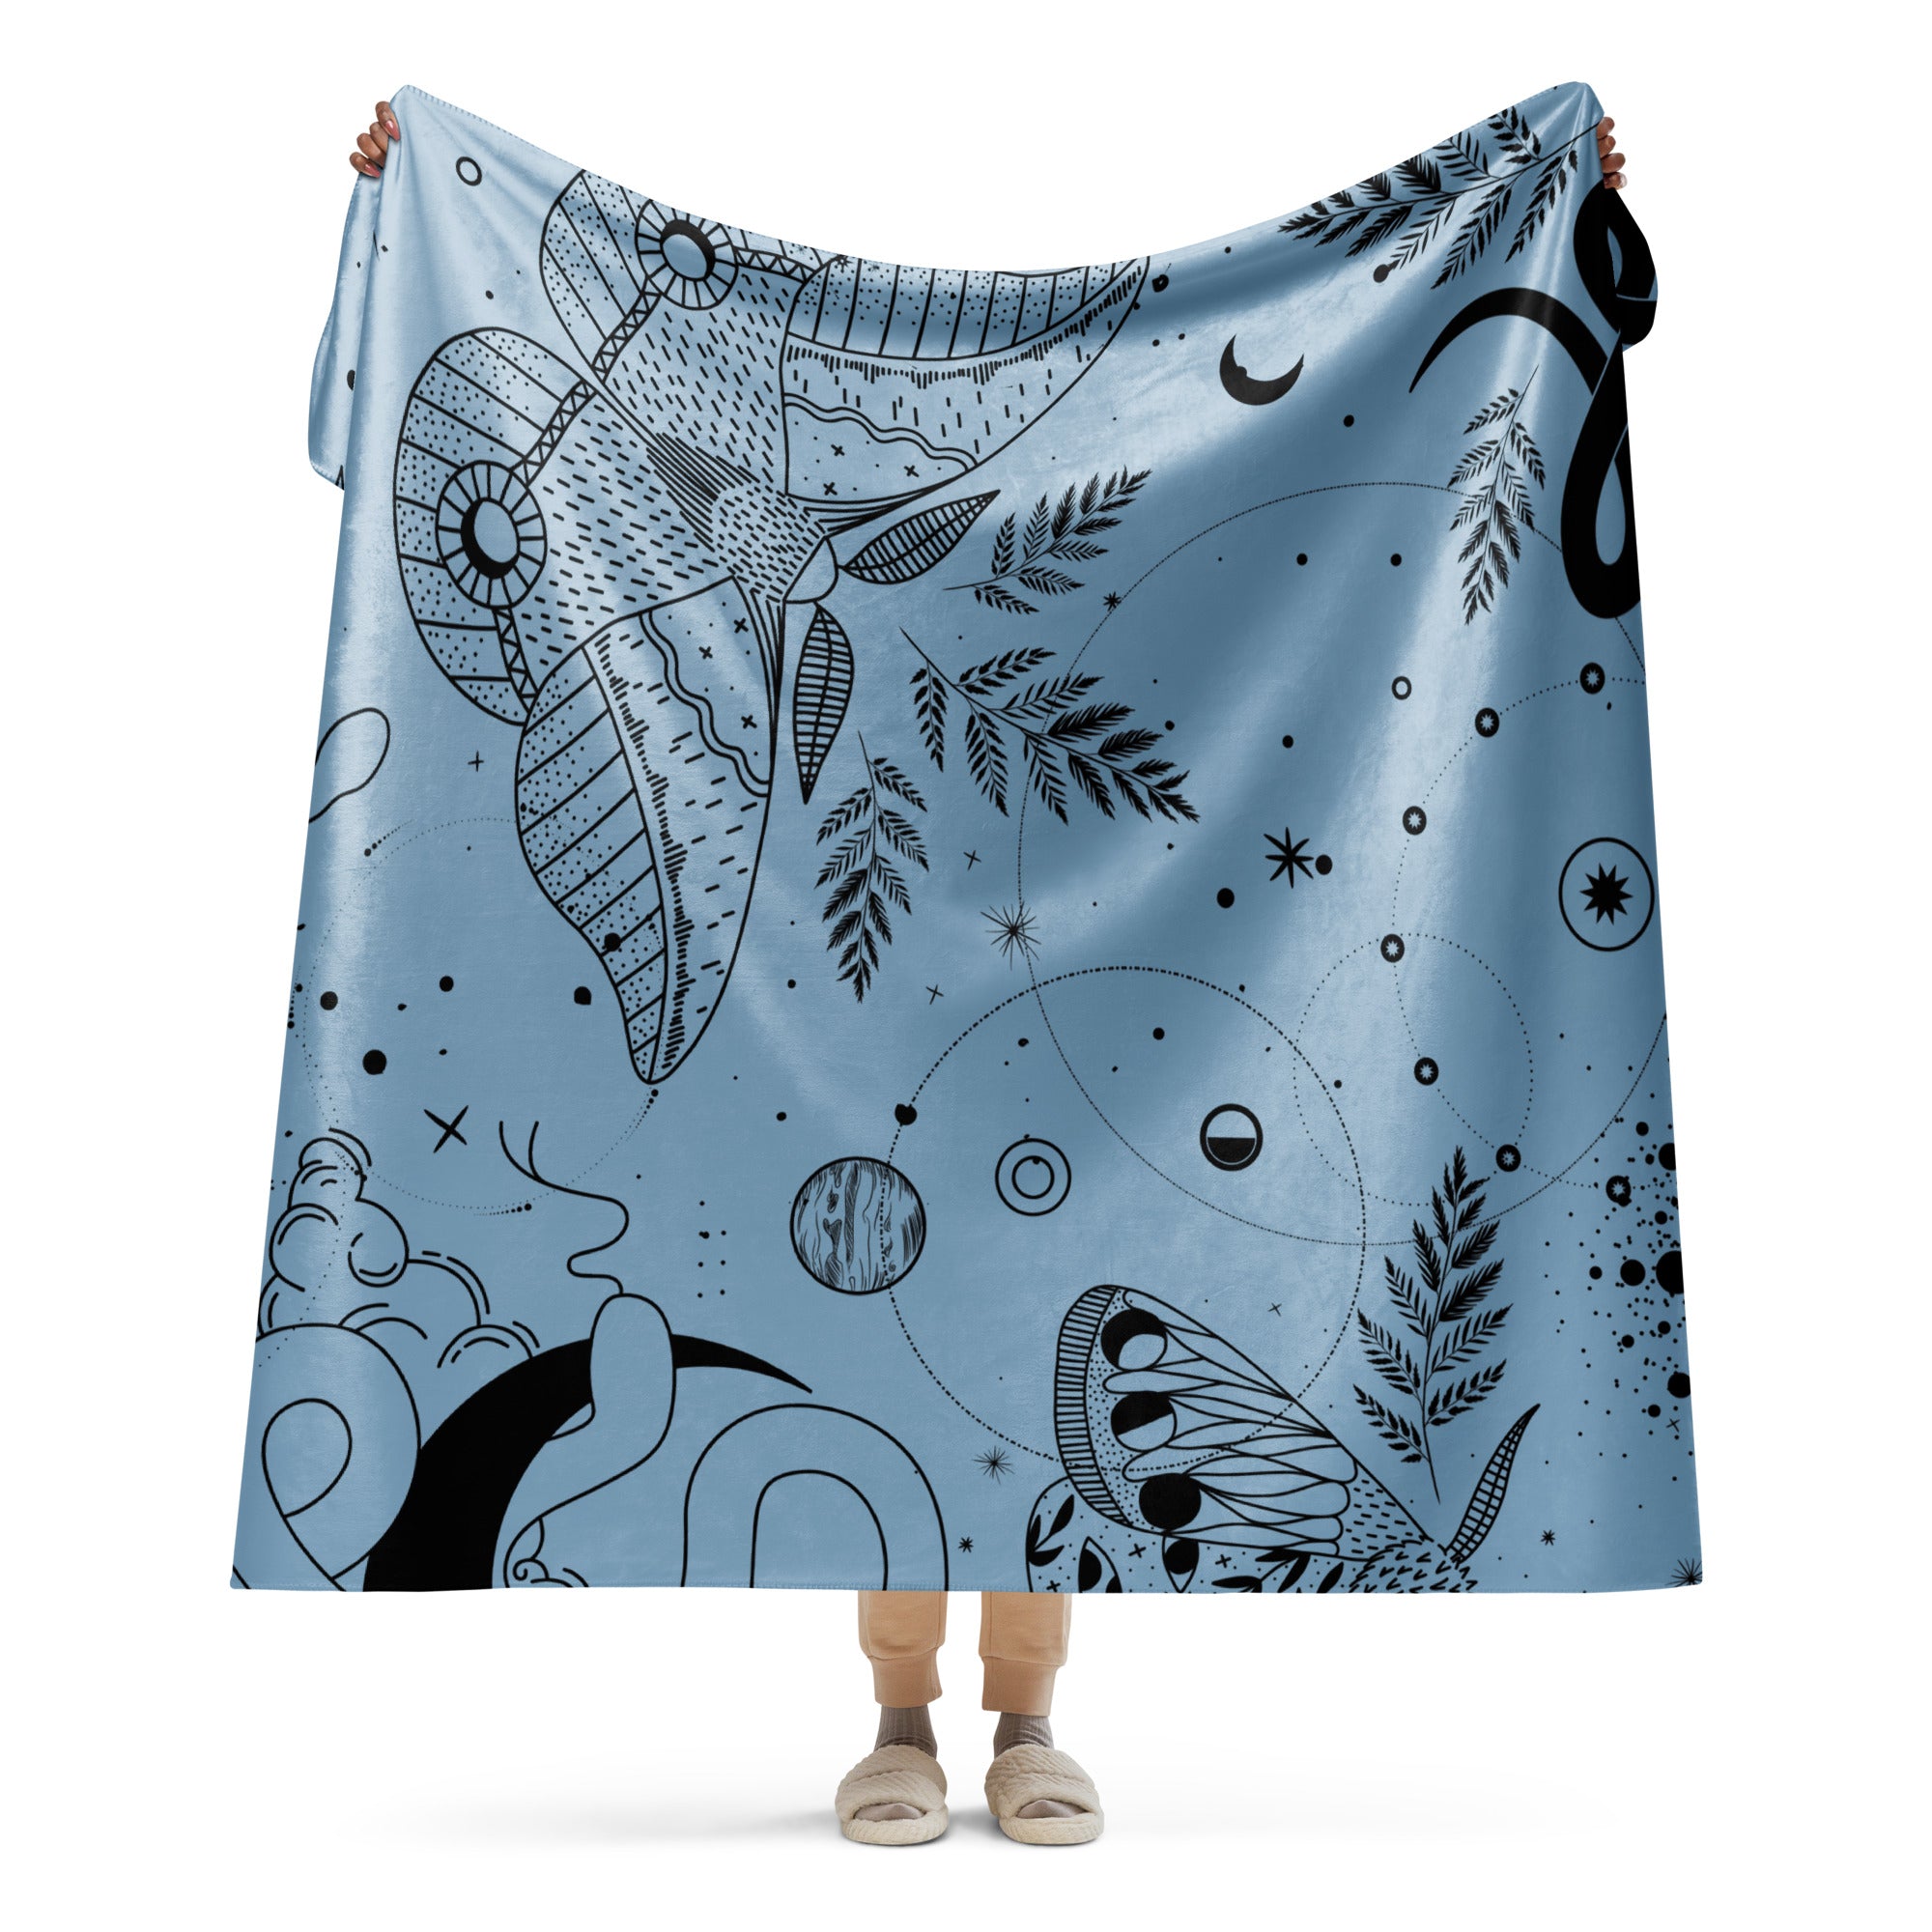 Cozy Astro Sherpa blanket